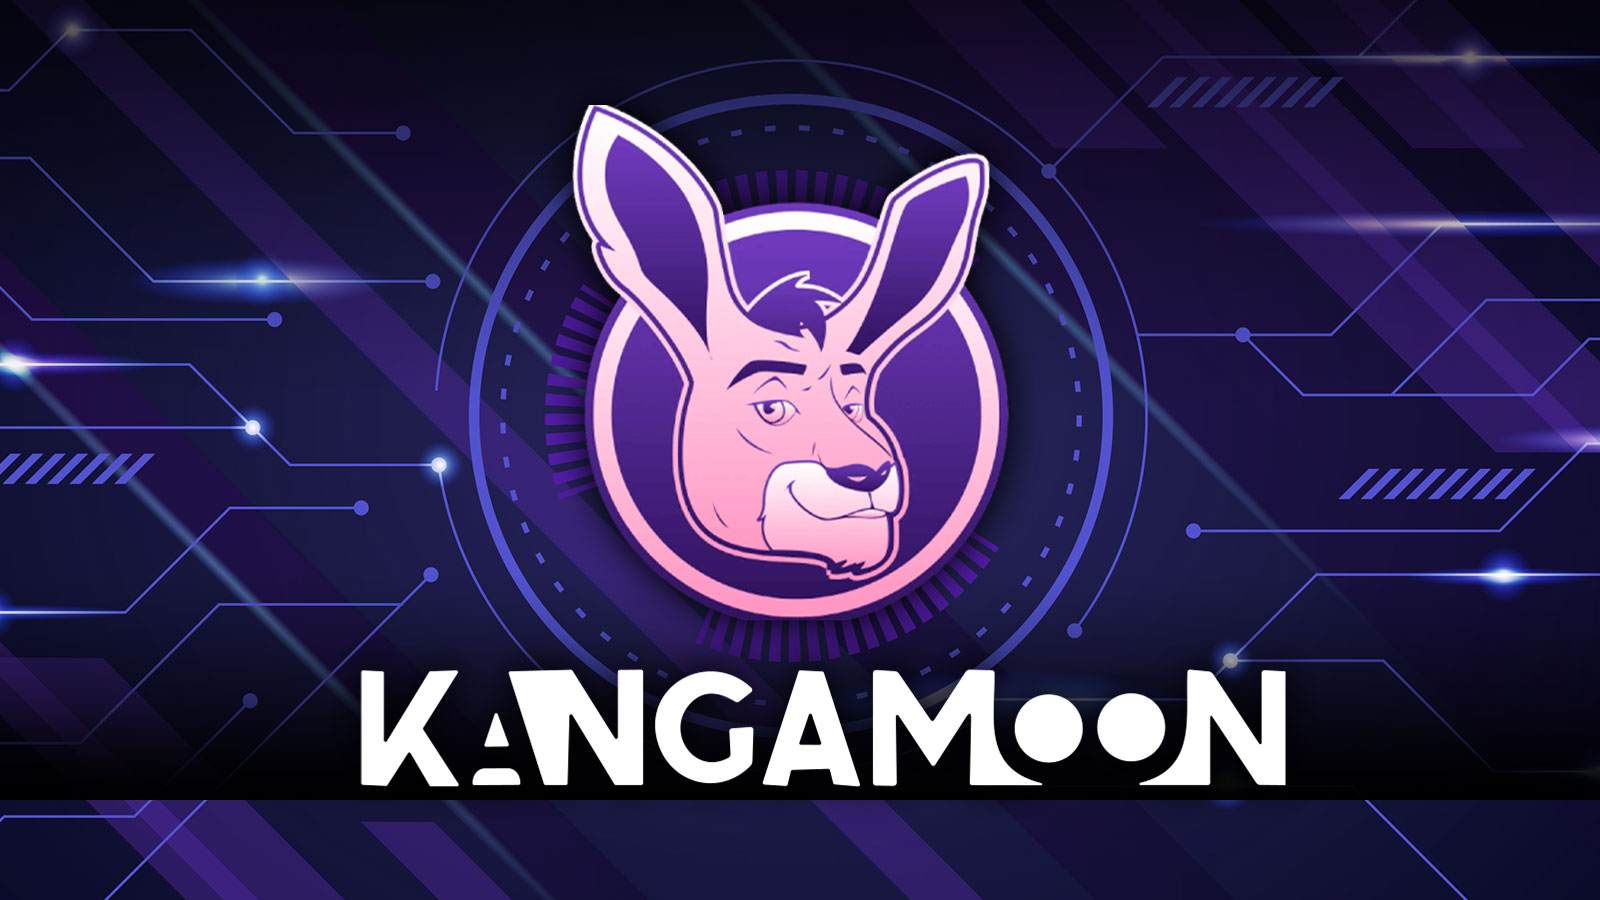 KangaMoon (KANG) Pre-Sale Novel Phase in Spotlight as Bitcoin (BTC), Dogecoin (DOGE) Gearing Towards New Highs